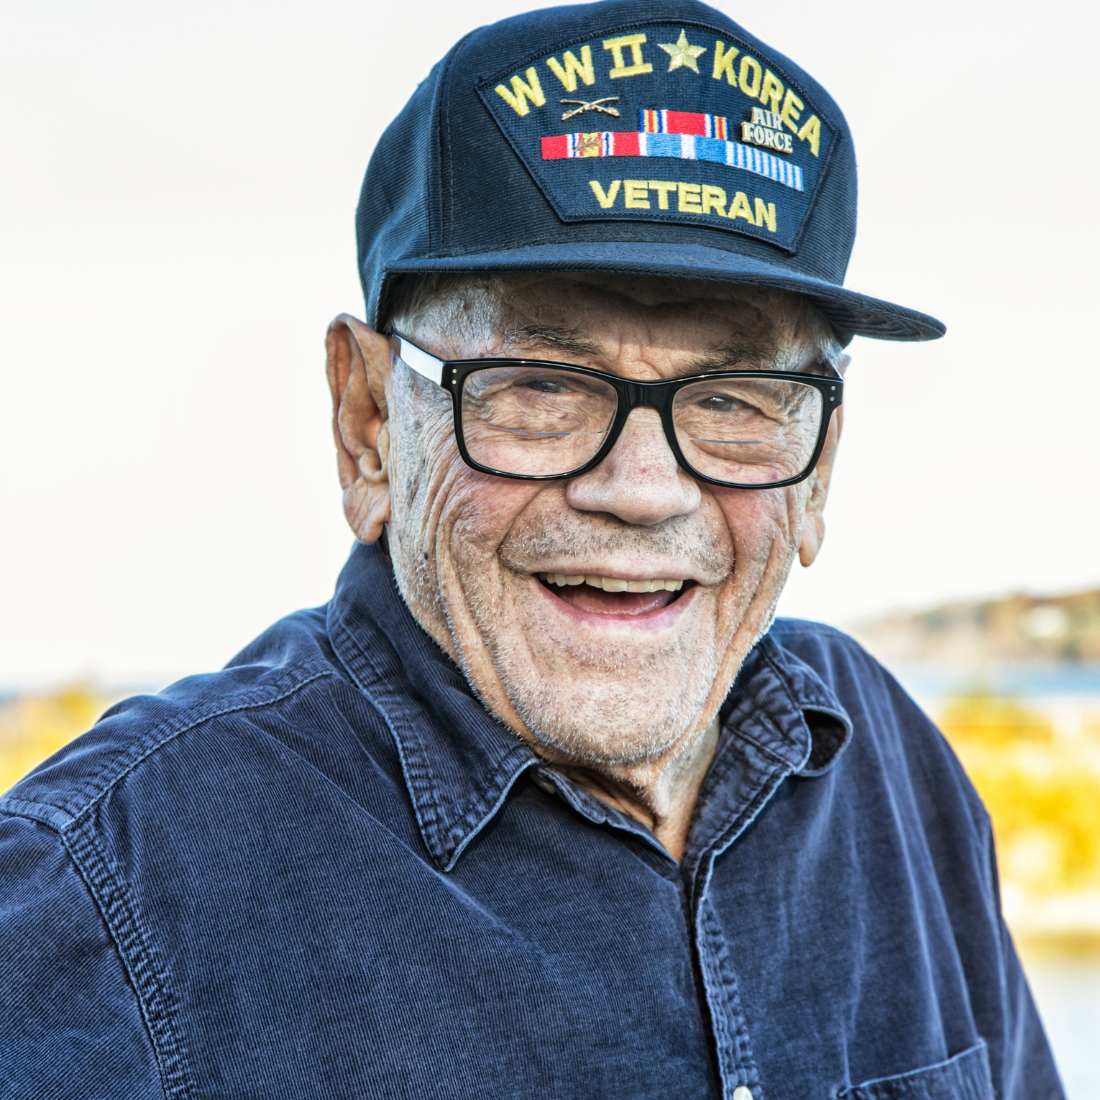 A happy senior veteran represents veteran care in Lexington